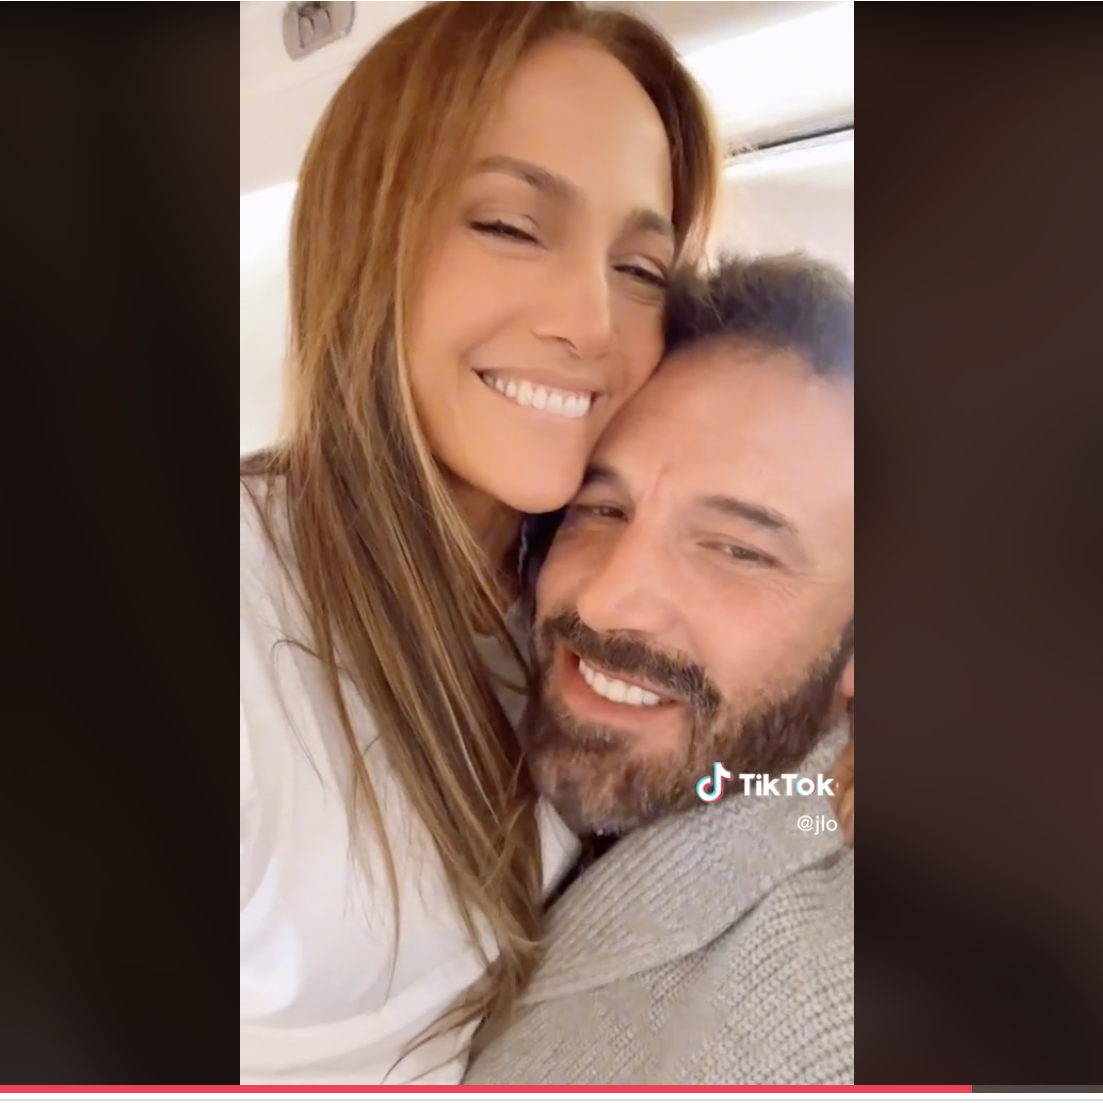 Jennifer Lopez Just Shared the Sweetest TikTok Video with Husband Ben Affleck